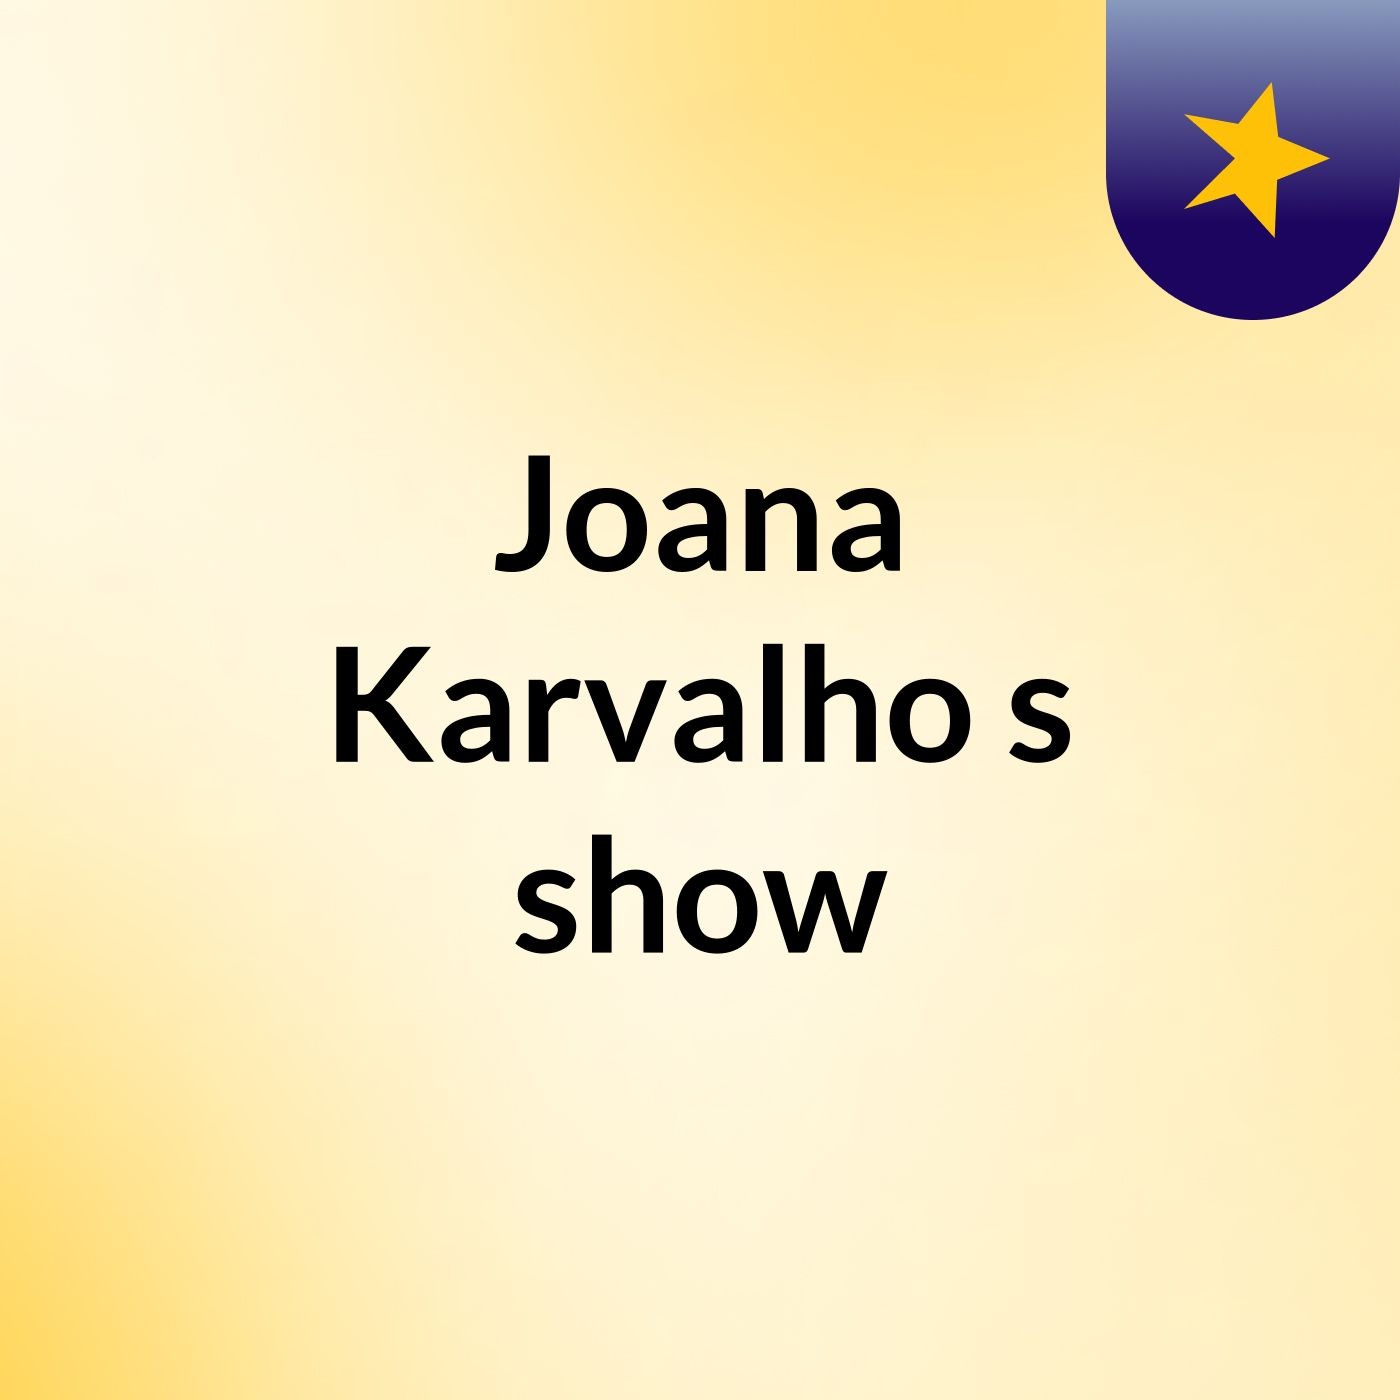 Joana Karvalho's show